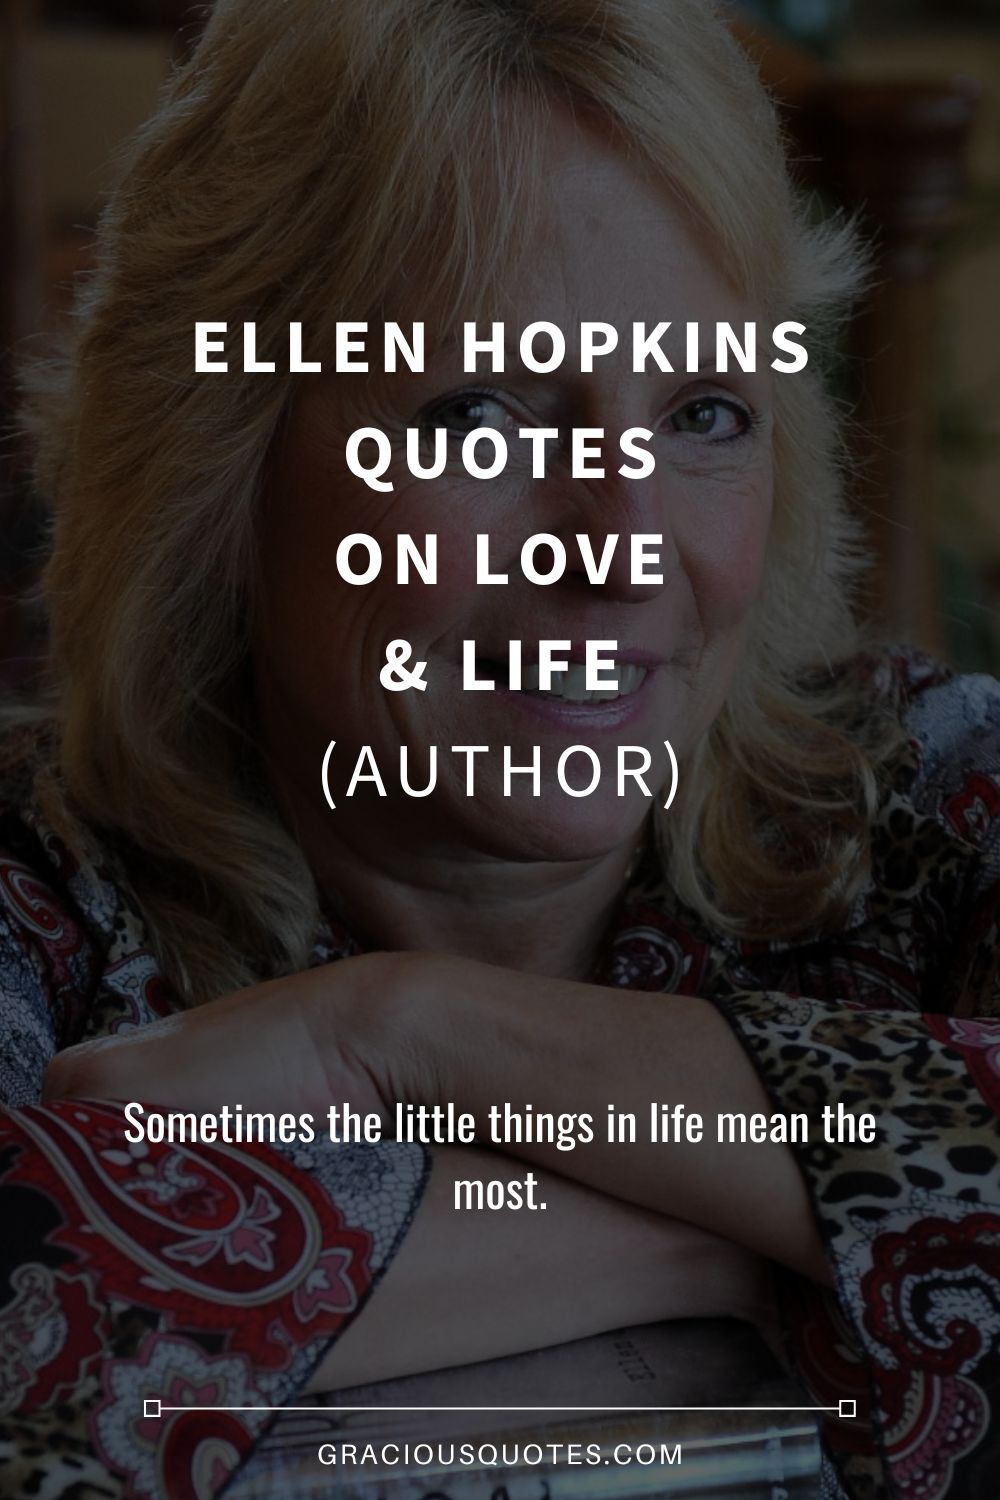 81 Ellen Hopkins Quotes on Love & Life (AUTHOR)